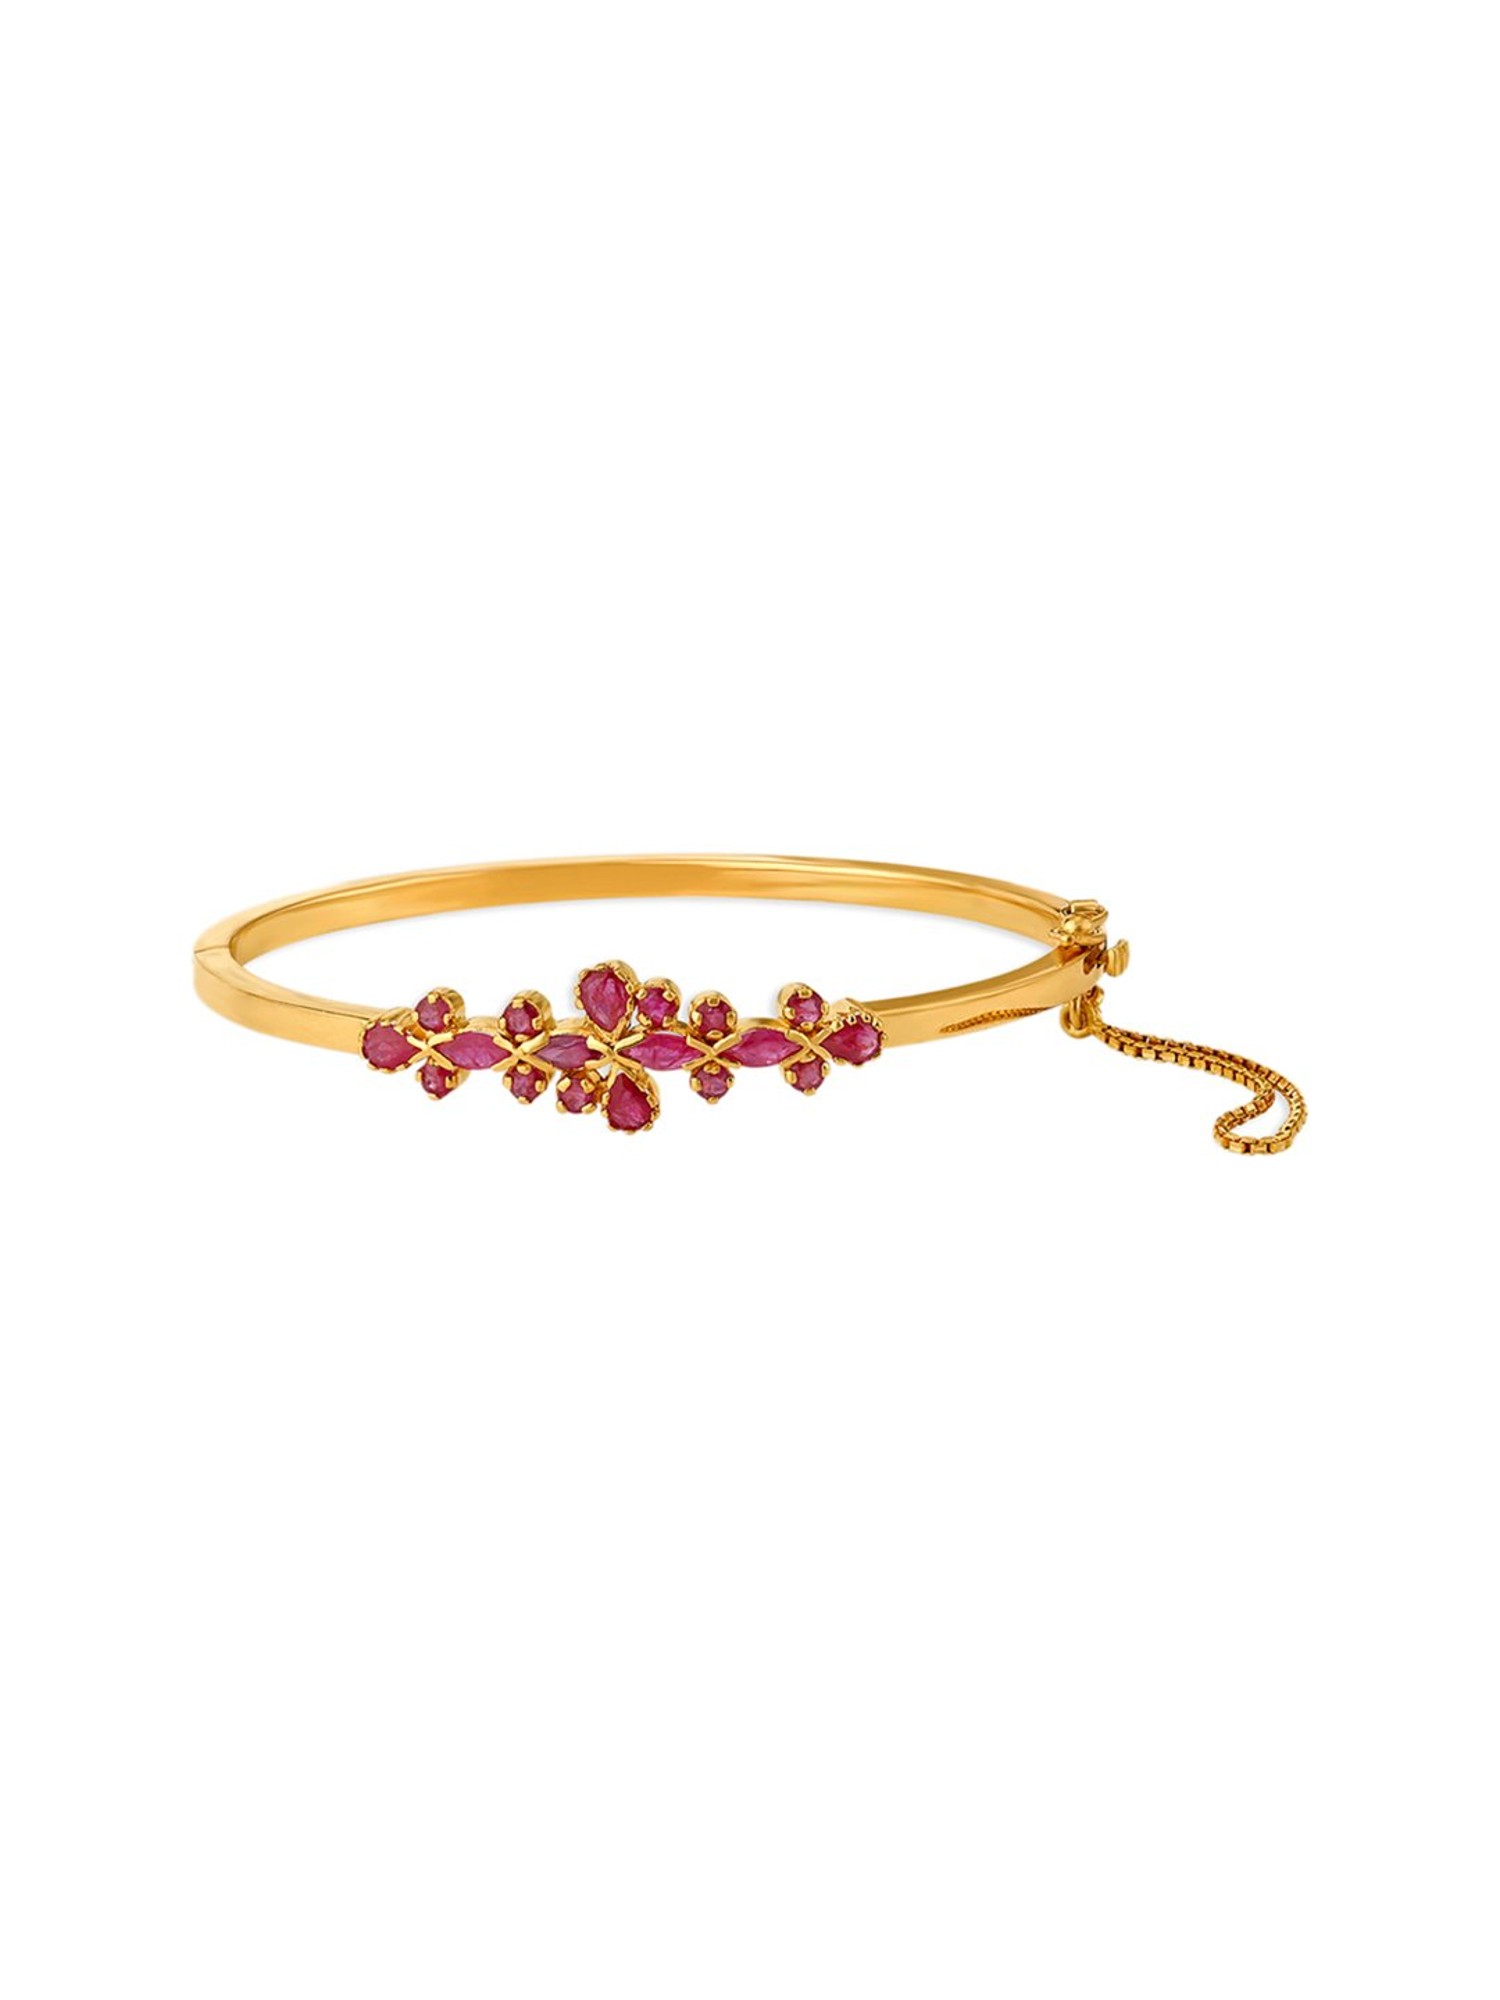 Discover more than 81 gold teddy bear bracelet - POPPY